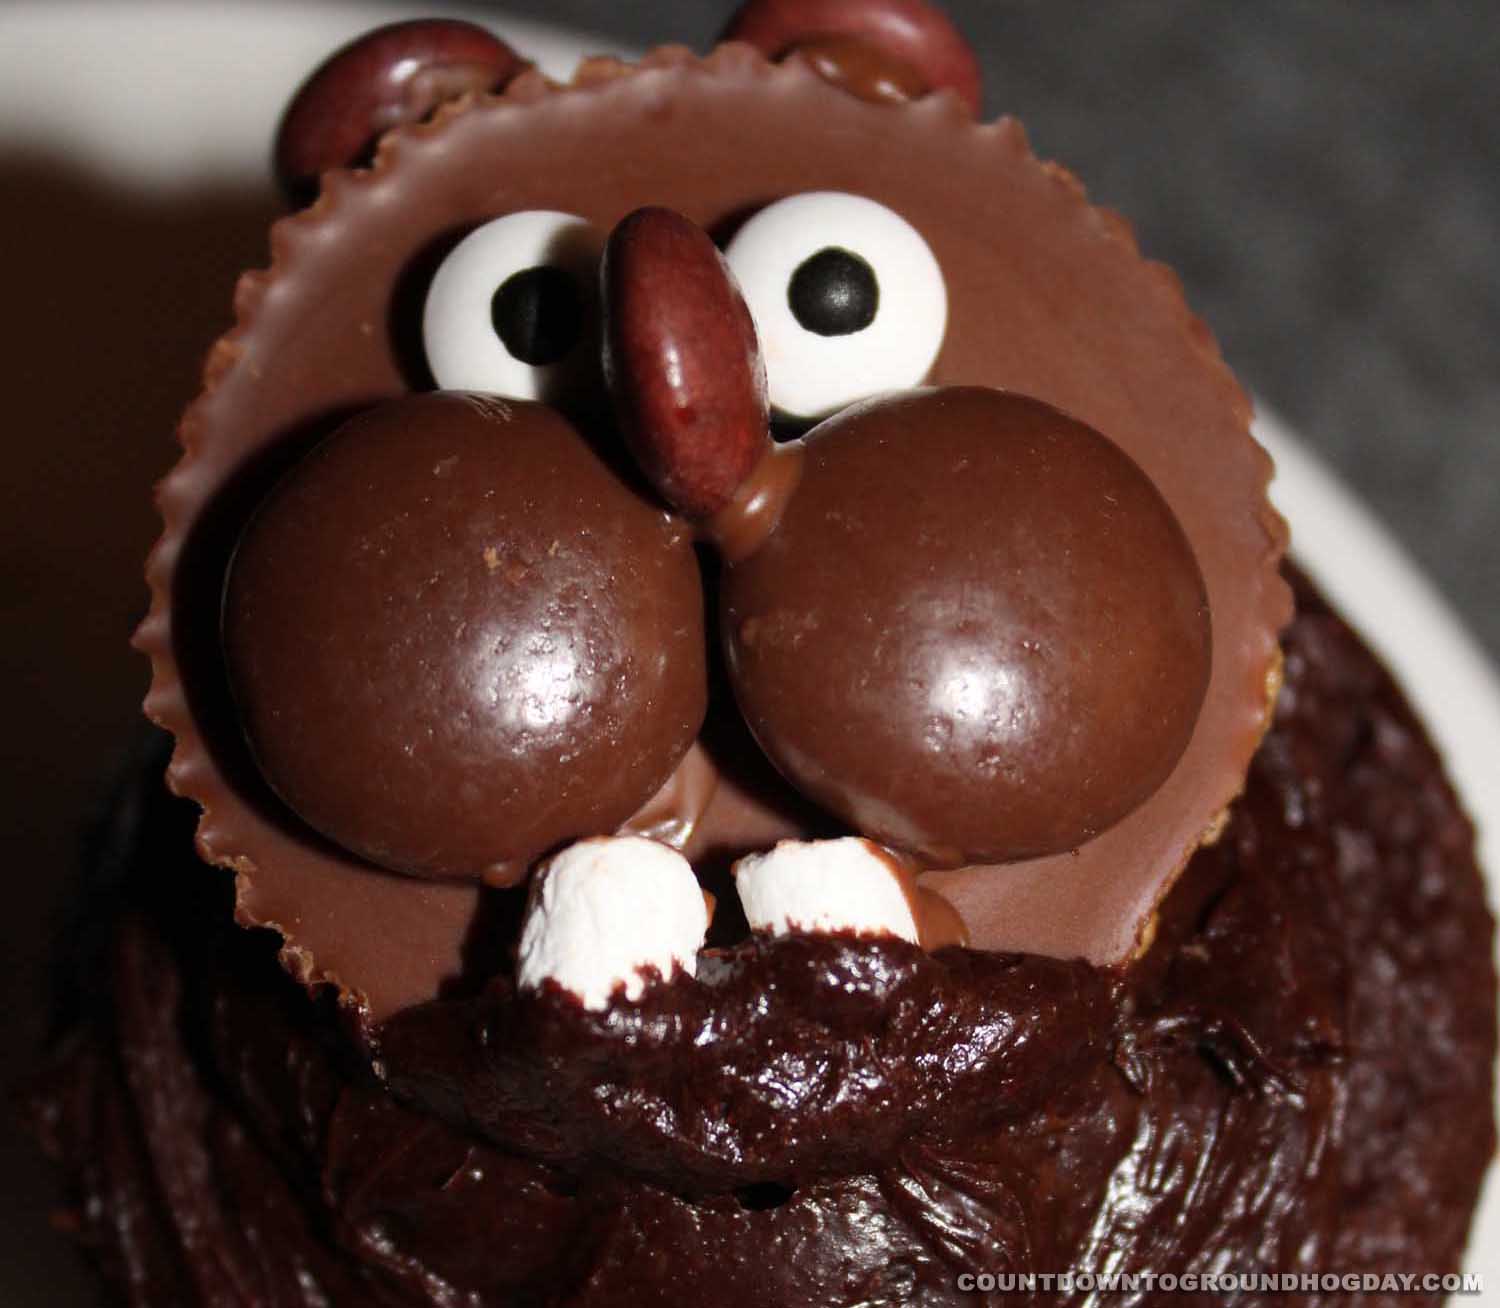 Groundhog cupcake